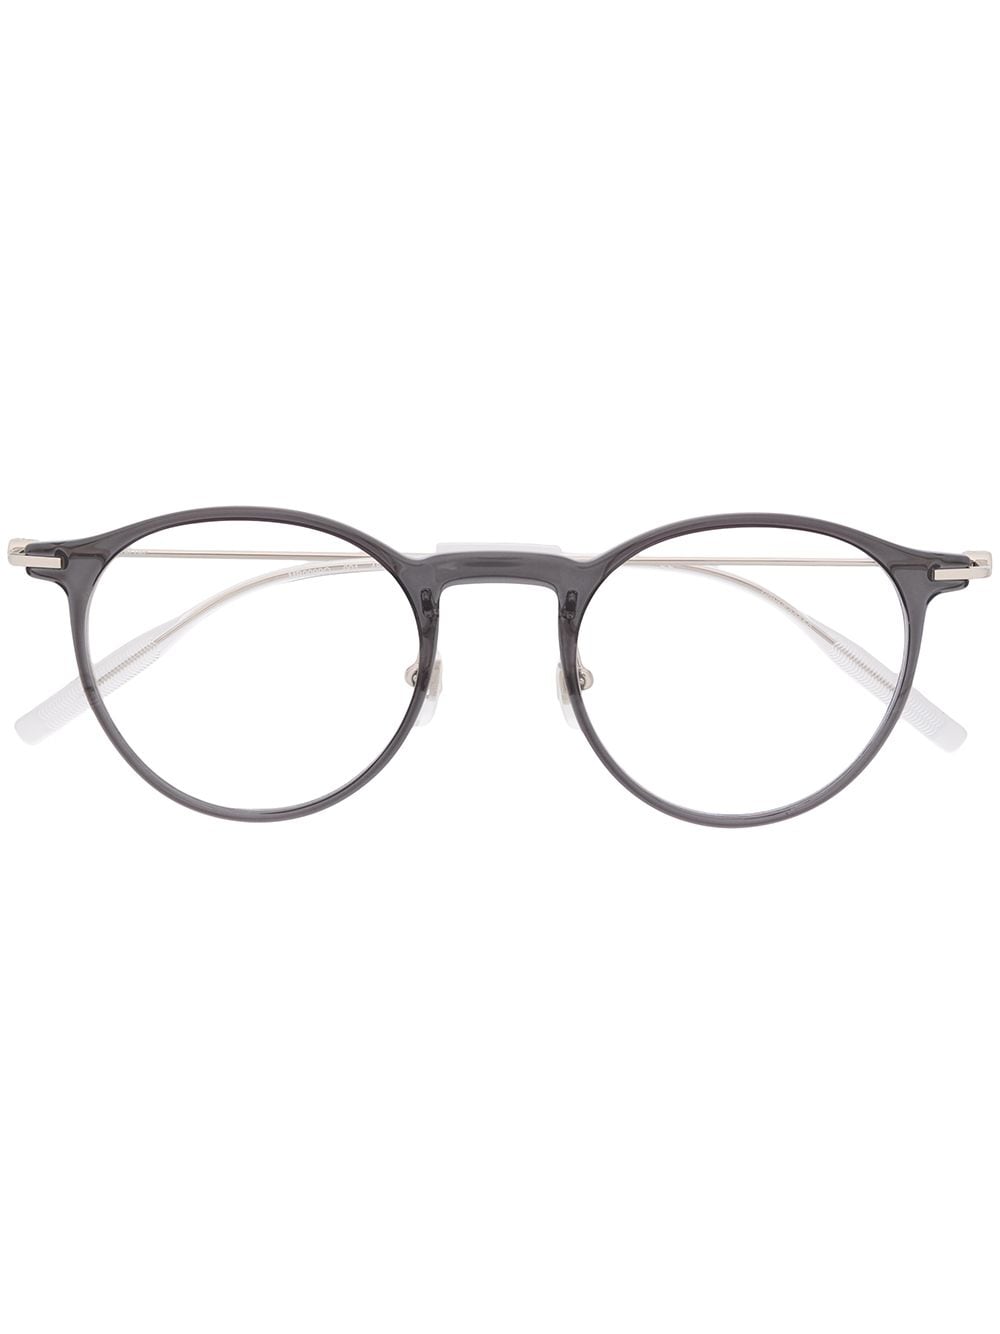 Montblanc polished round-frame glasses - Grey von Montblanc